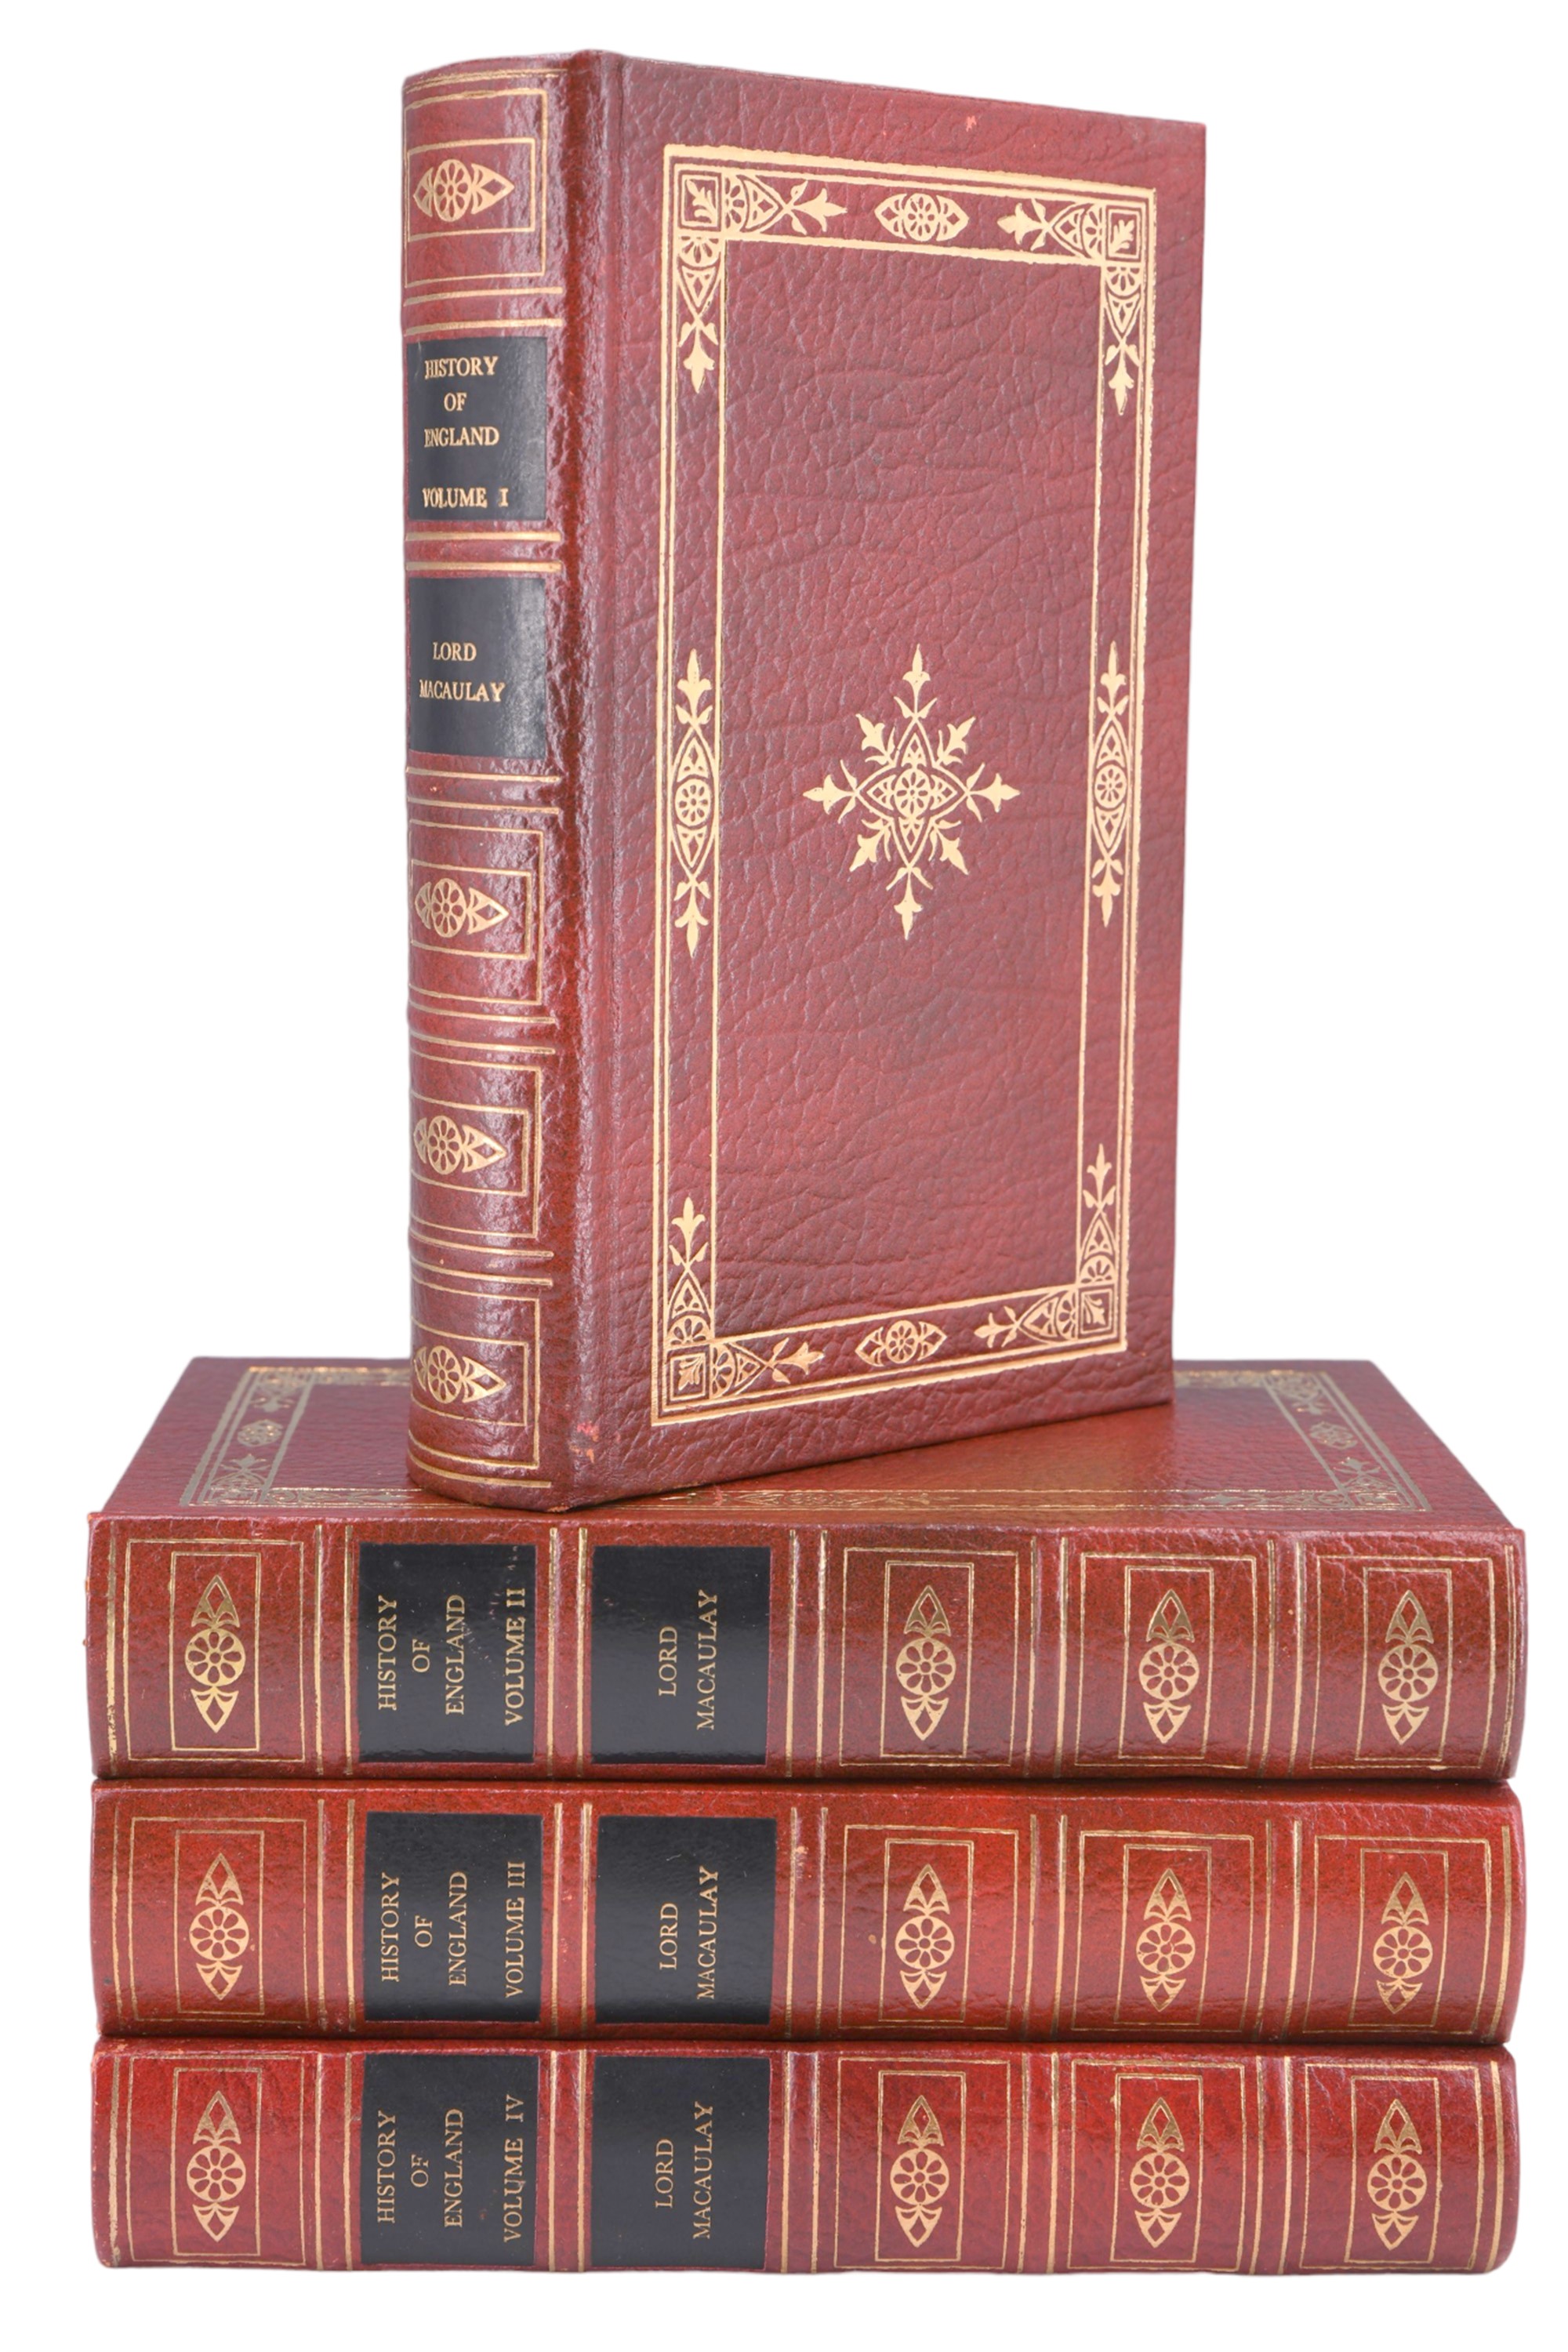 Lord Macauley, "History of England", 4 vols, Heron Books, 1697 - Image 2 of 23